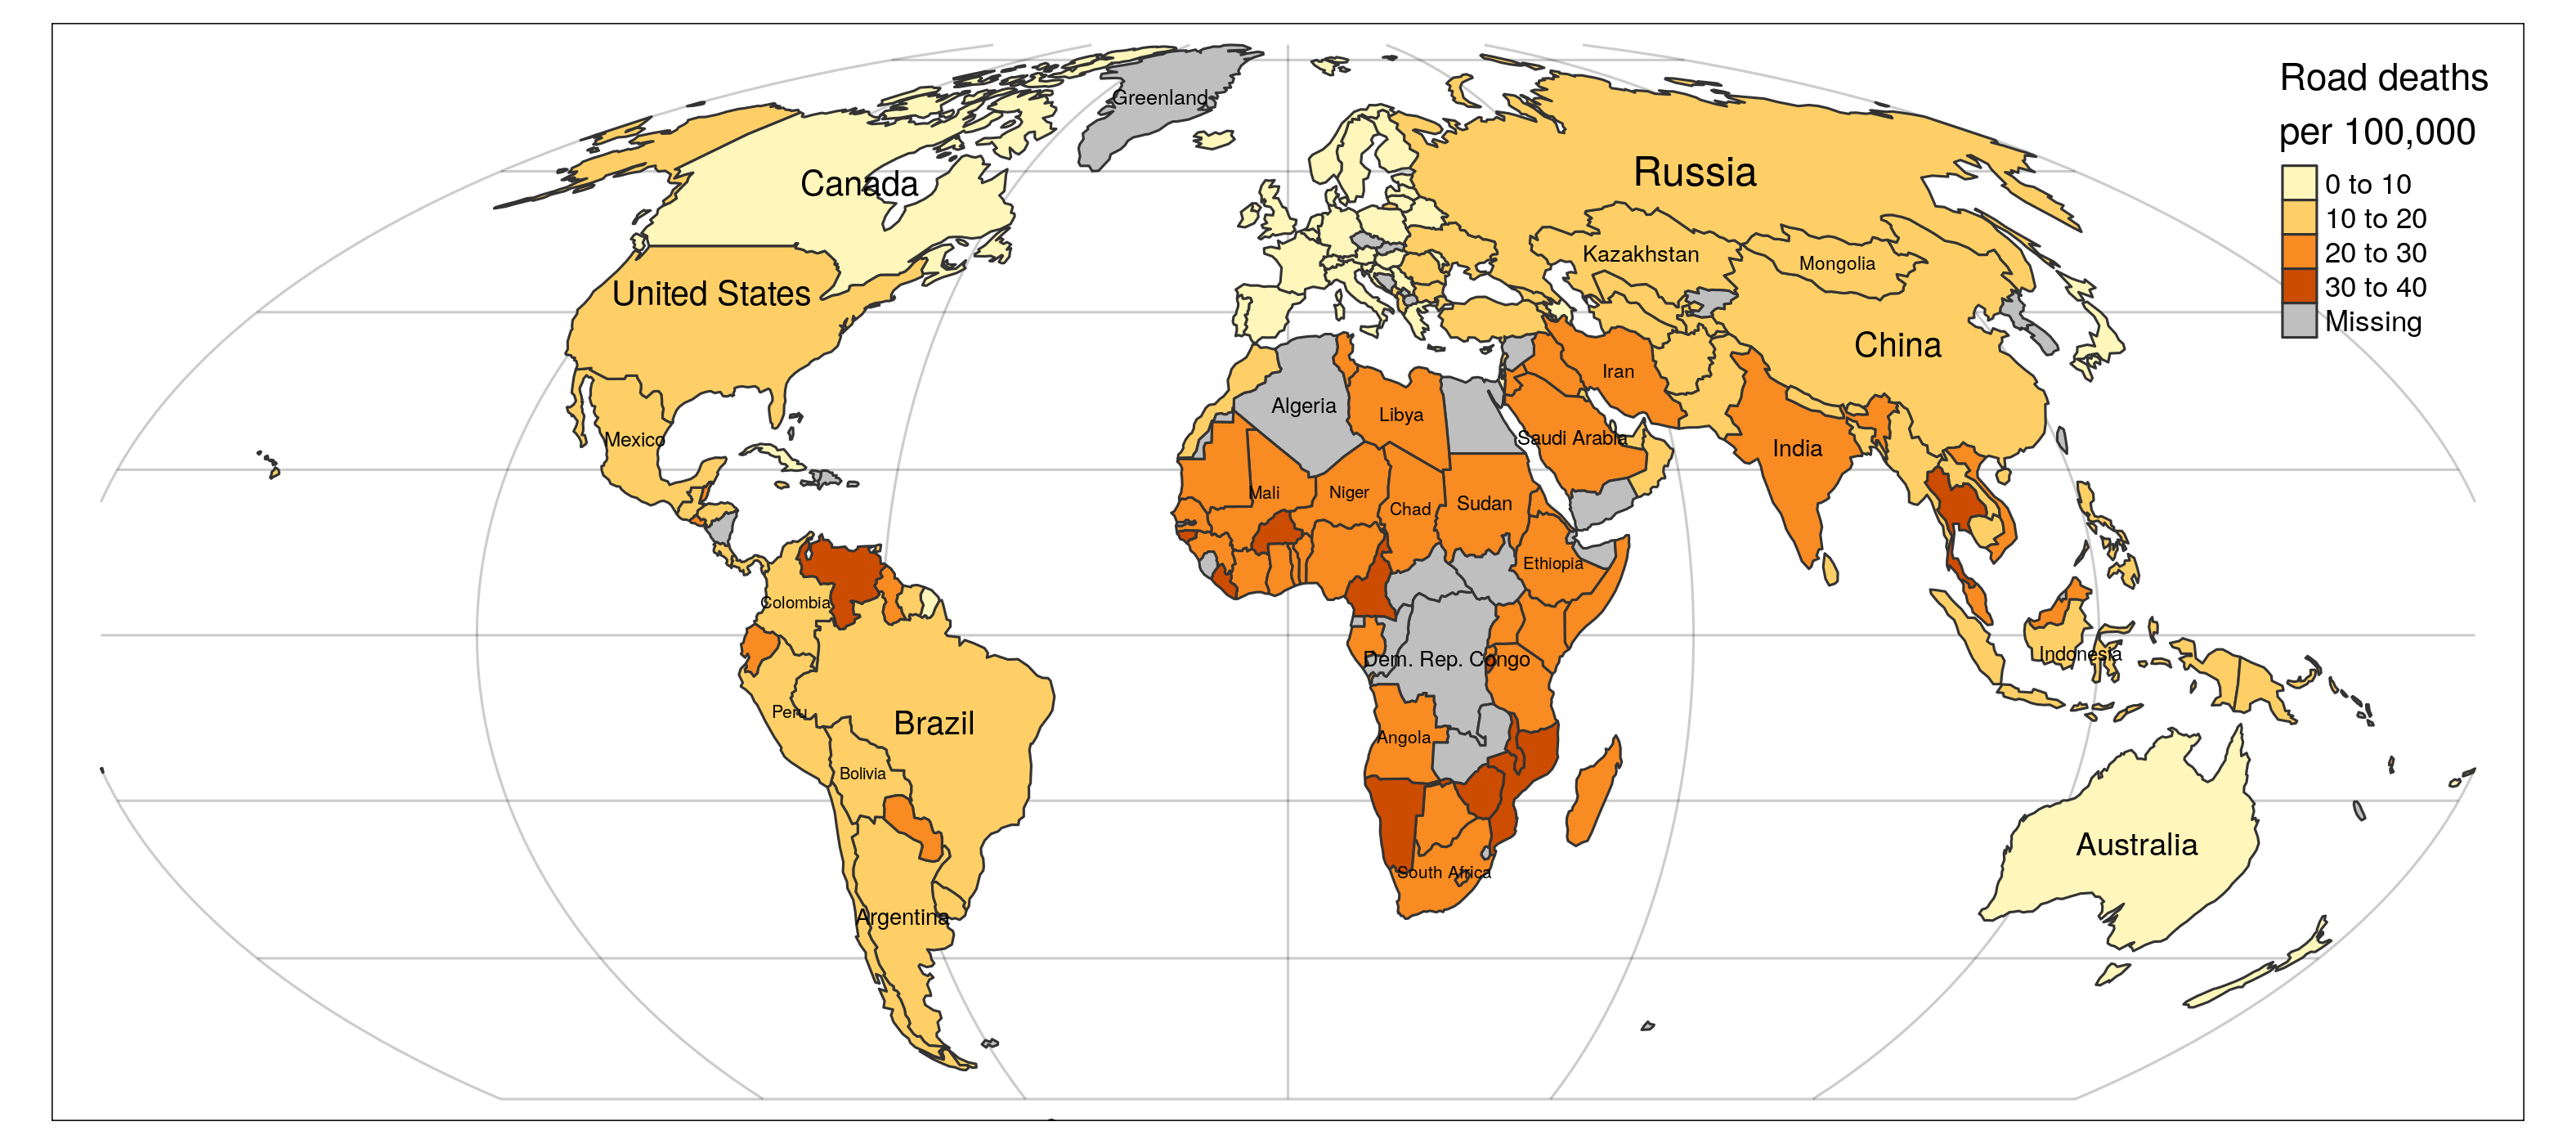 Road danger levels worldwide in 2016. Data source: World Bank. Reproducible source code: [github.com/itsleeds/rrsrr](https://github.com/ITSLeeds/rrsrr/blob/master/code/world-casualties.R).